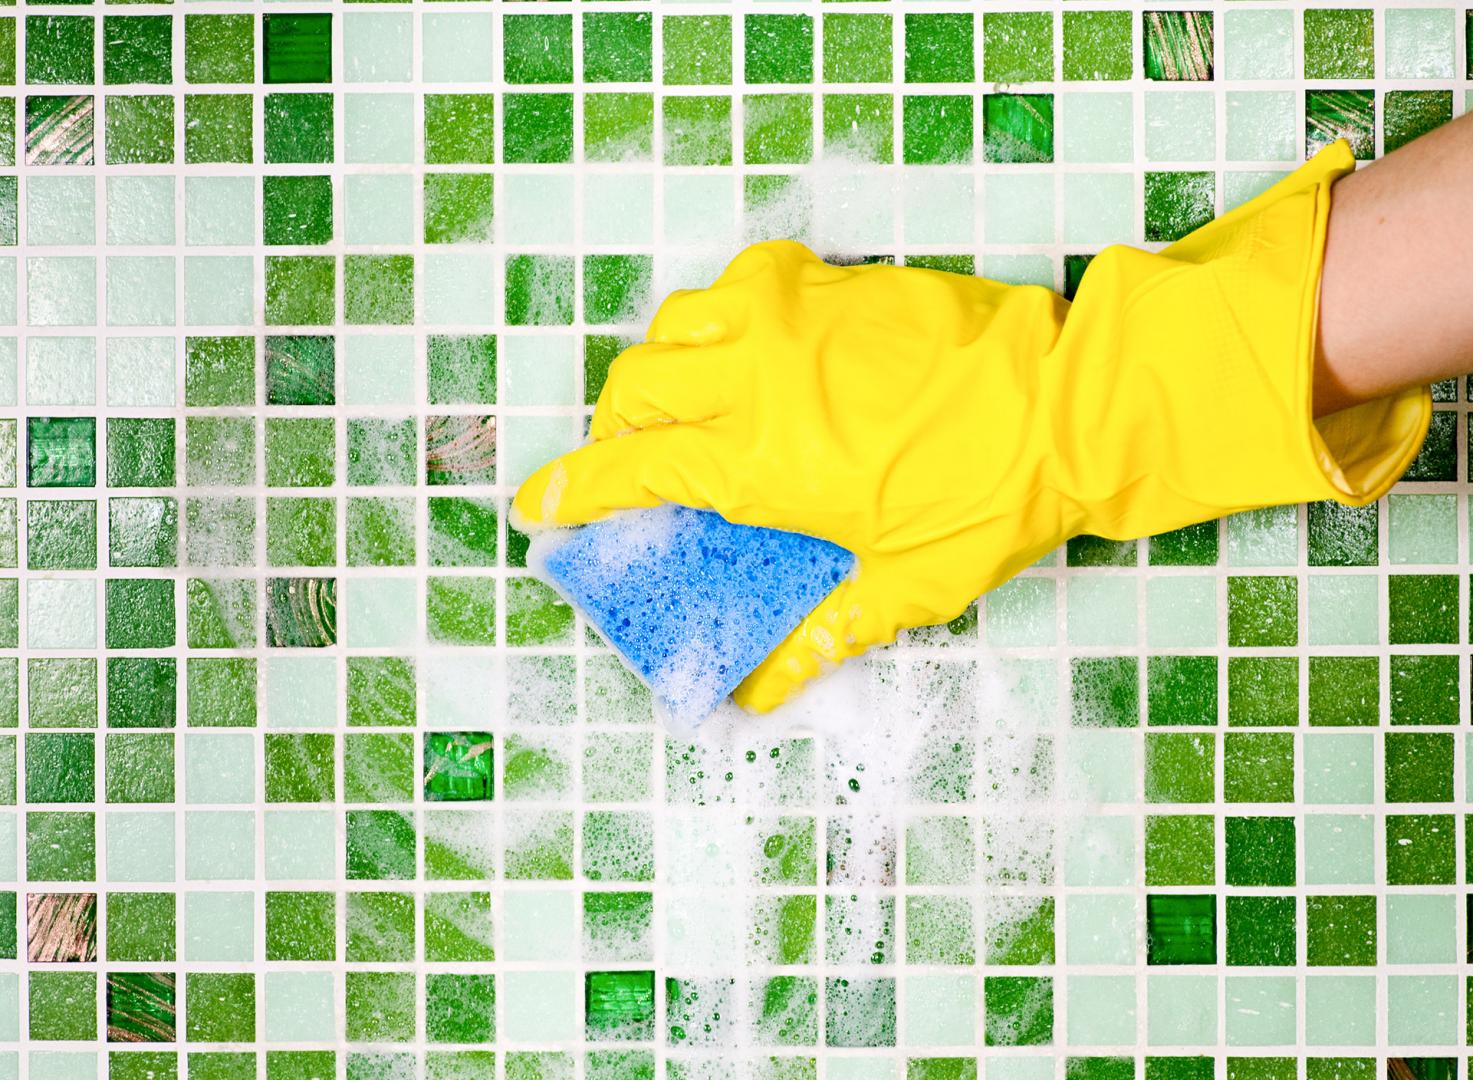 Rubber glove scrubbing tiles for mold